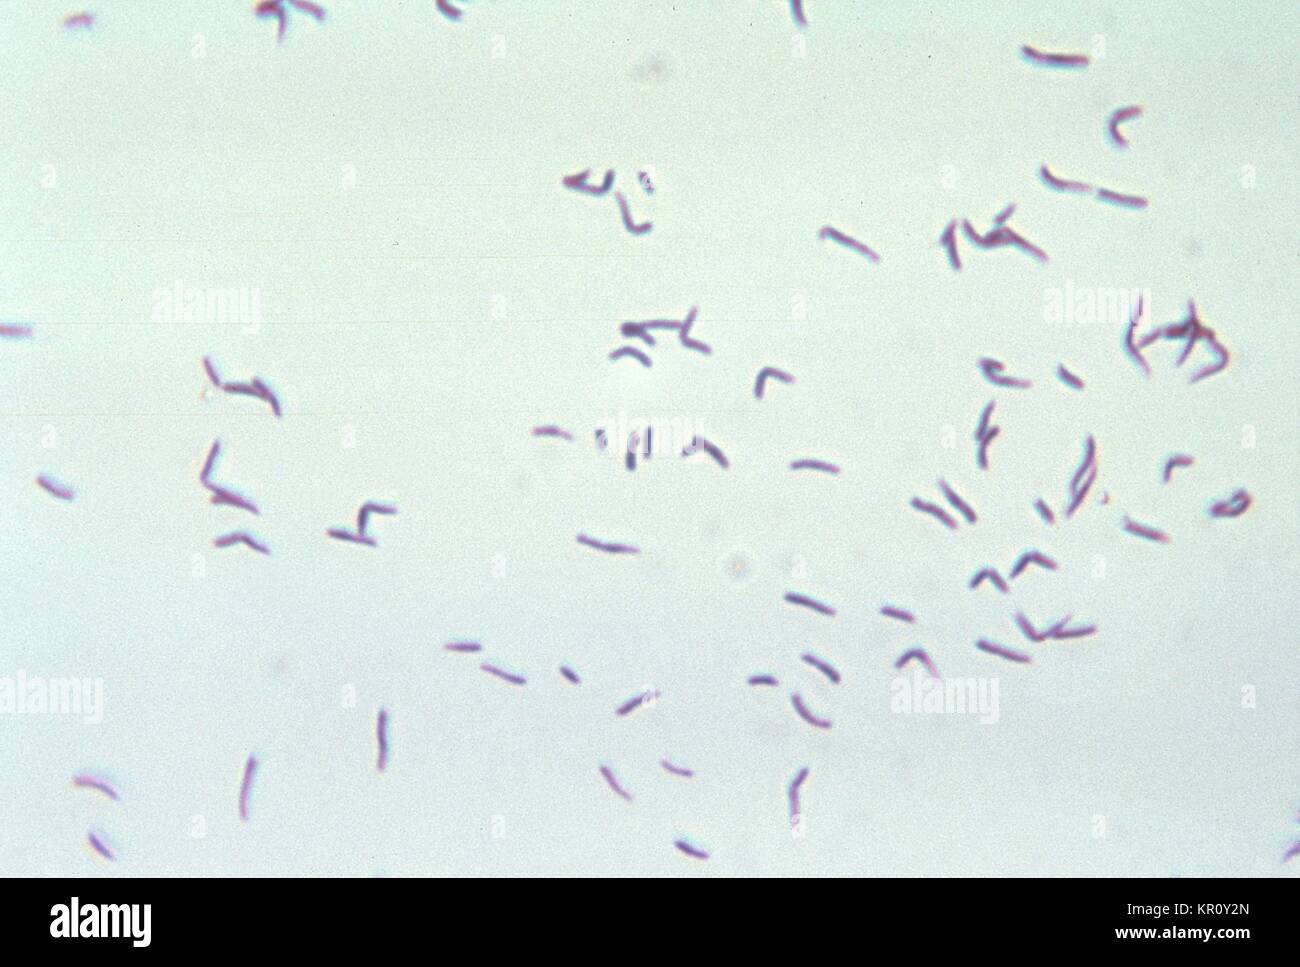 This micrograph depicts the gram-positive bacterium Eubacterium Stock ...